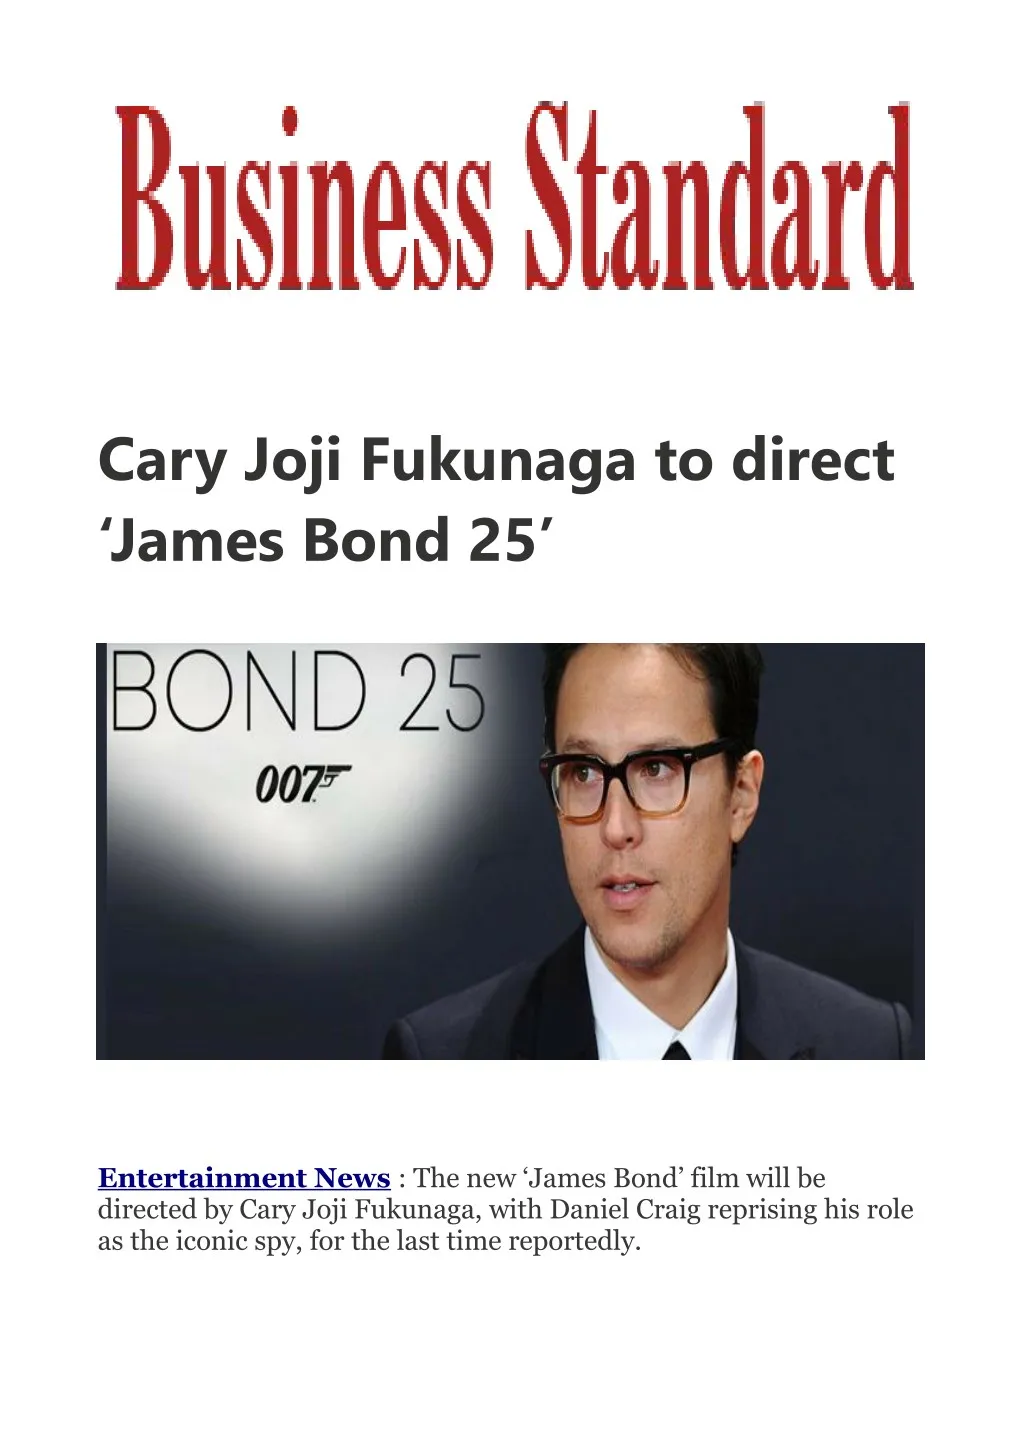 cary joji fukunaga to direct james bond 25